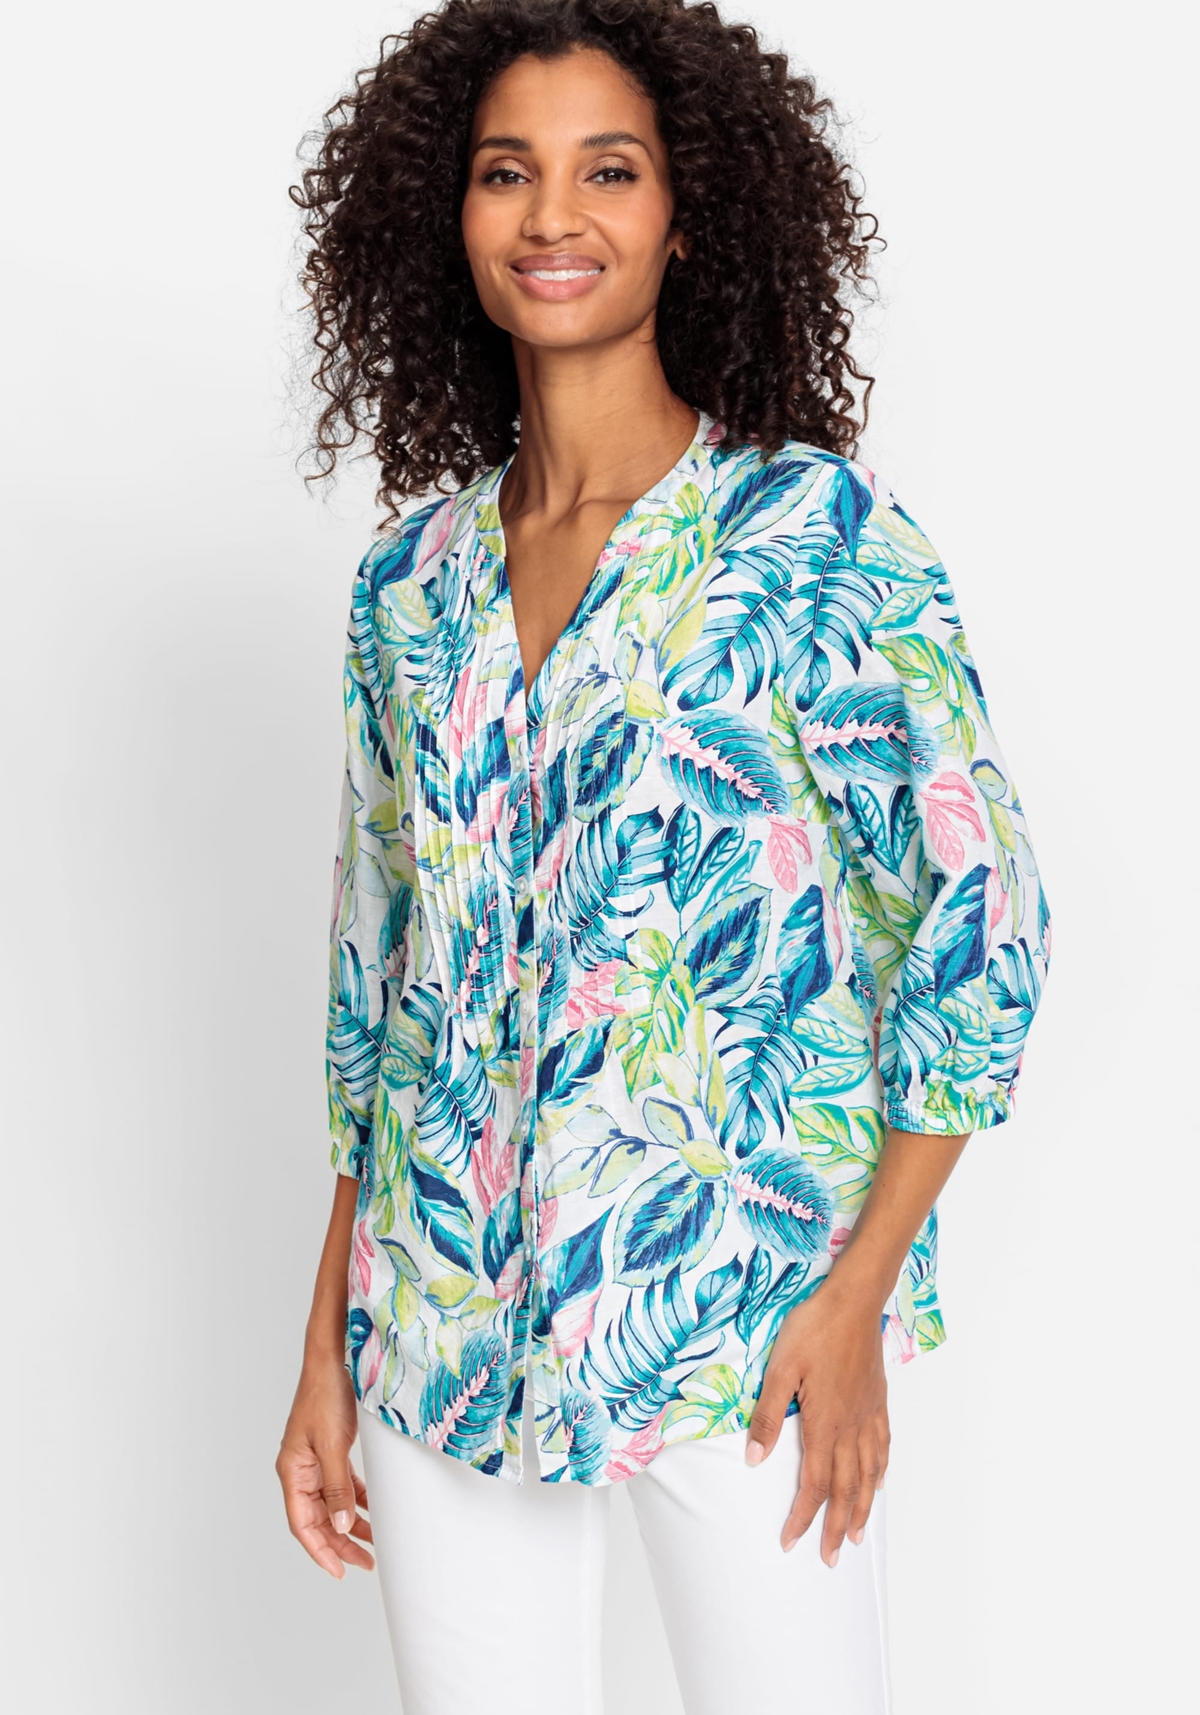 Women's Cotton Linen 3/4 Tropic Print Tunic Shirt - Light turquoise